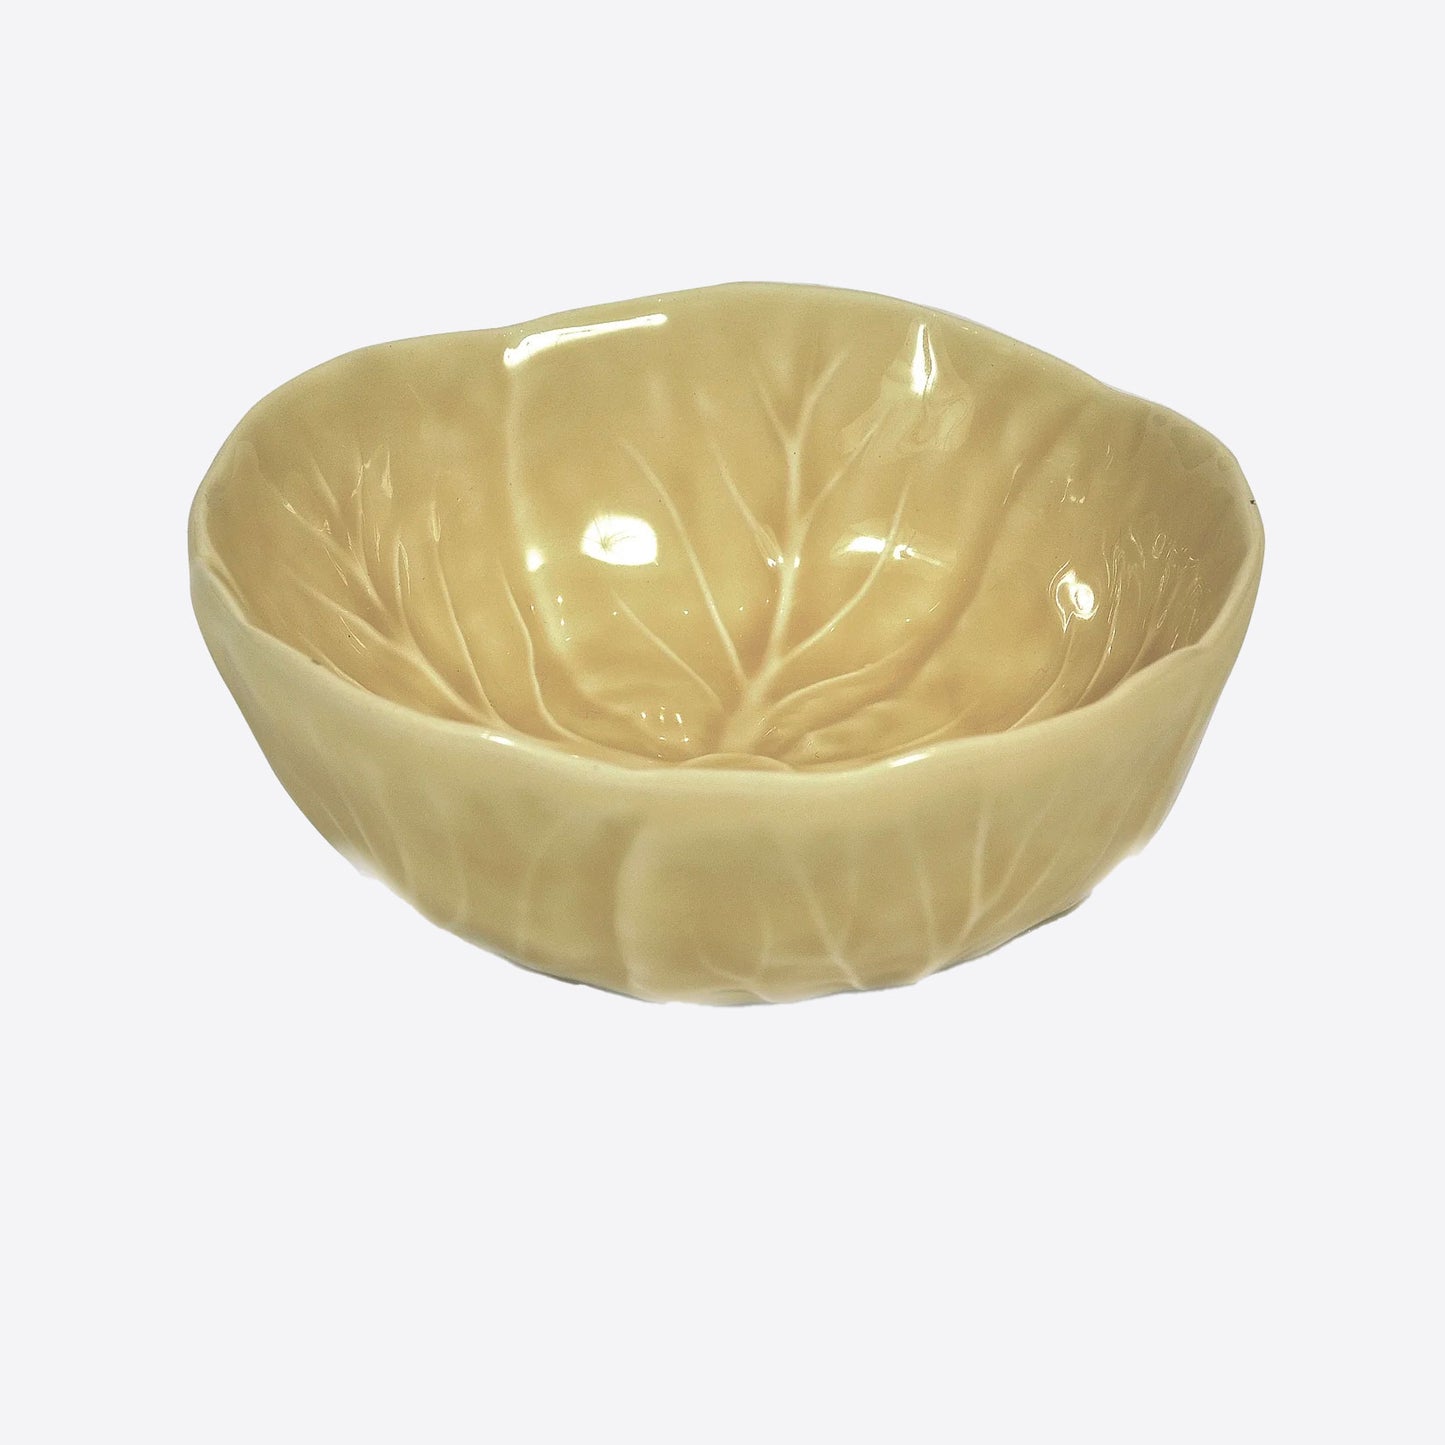 Yellow ceramic cabbage bowl